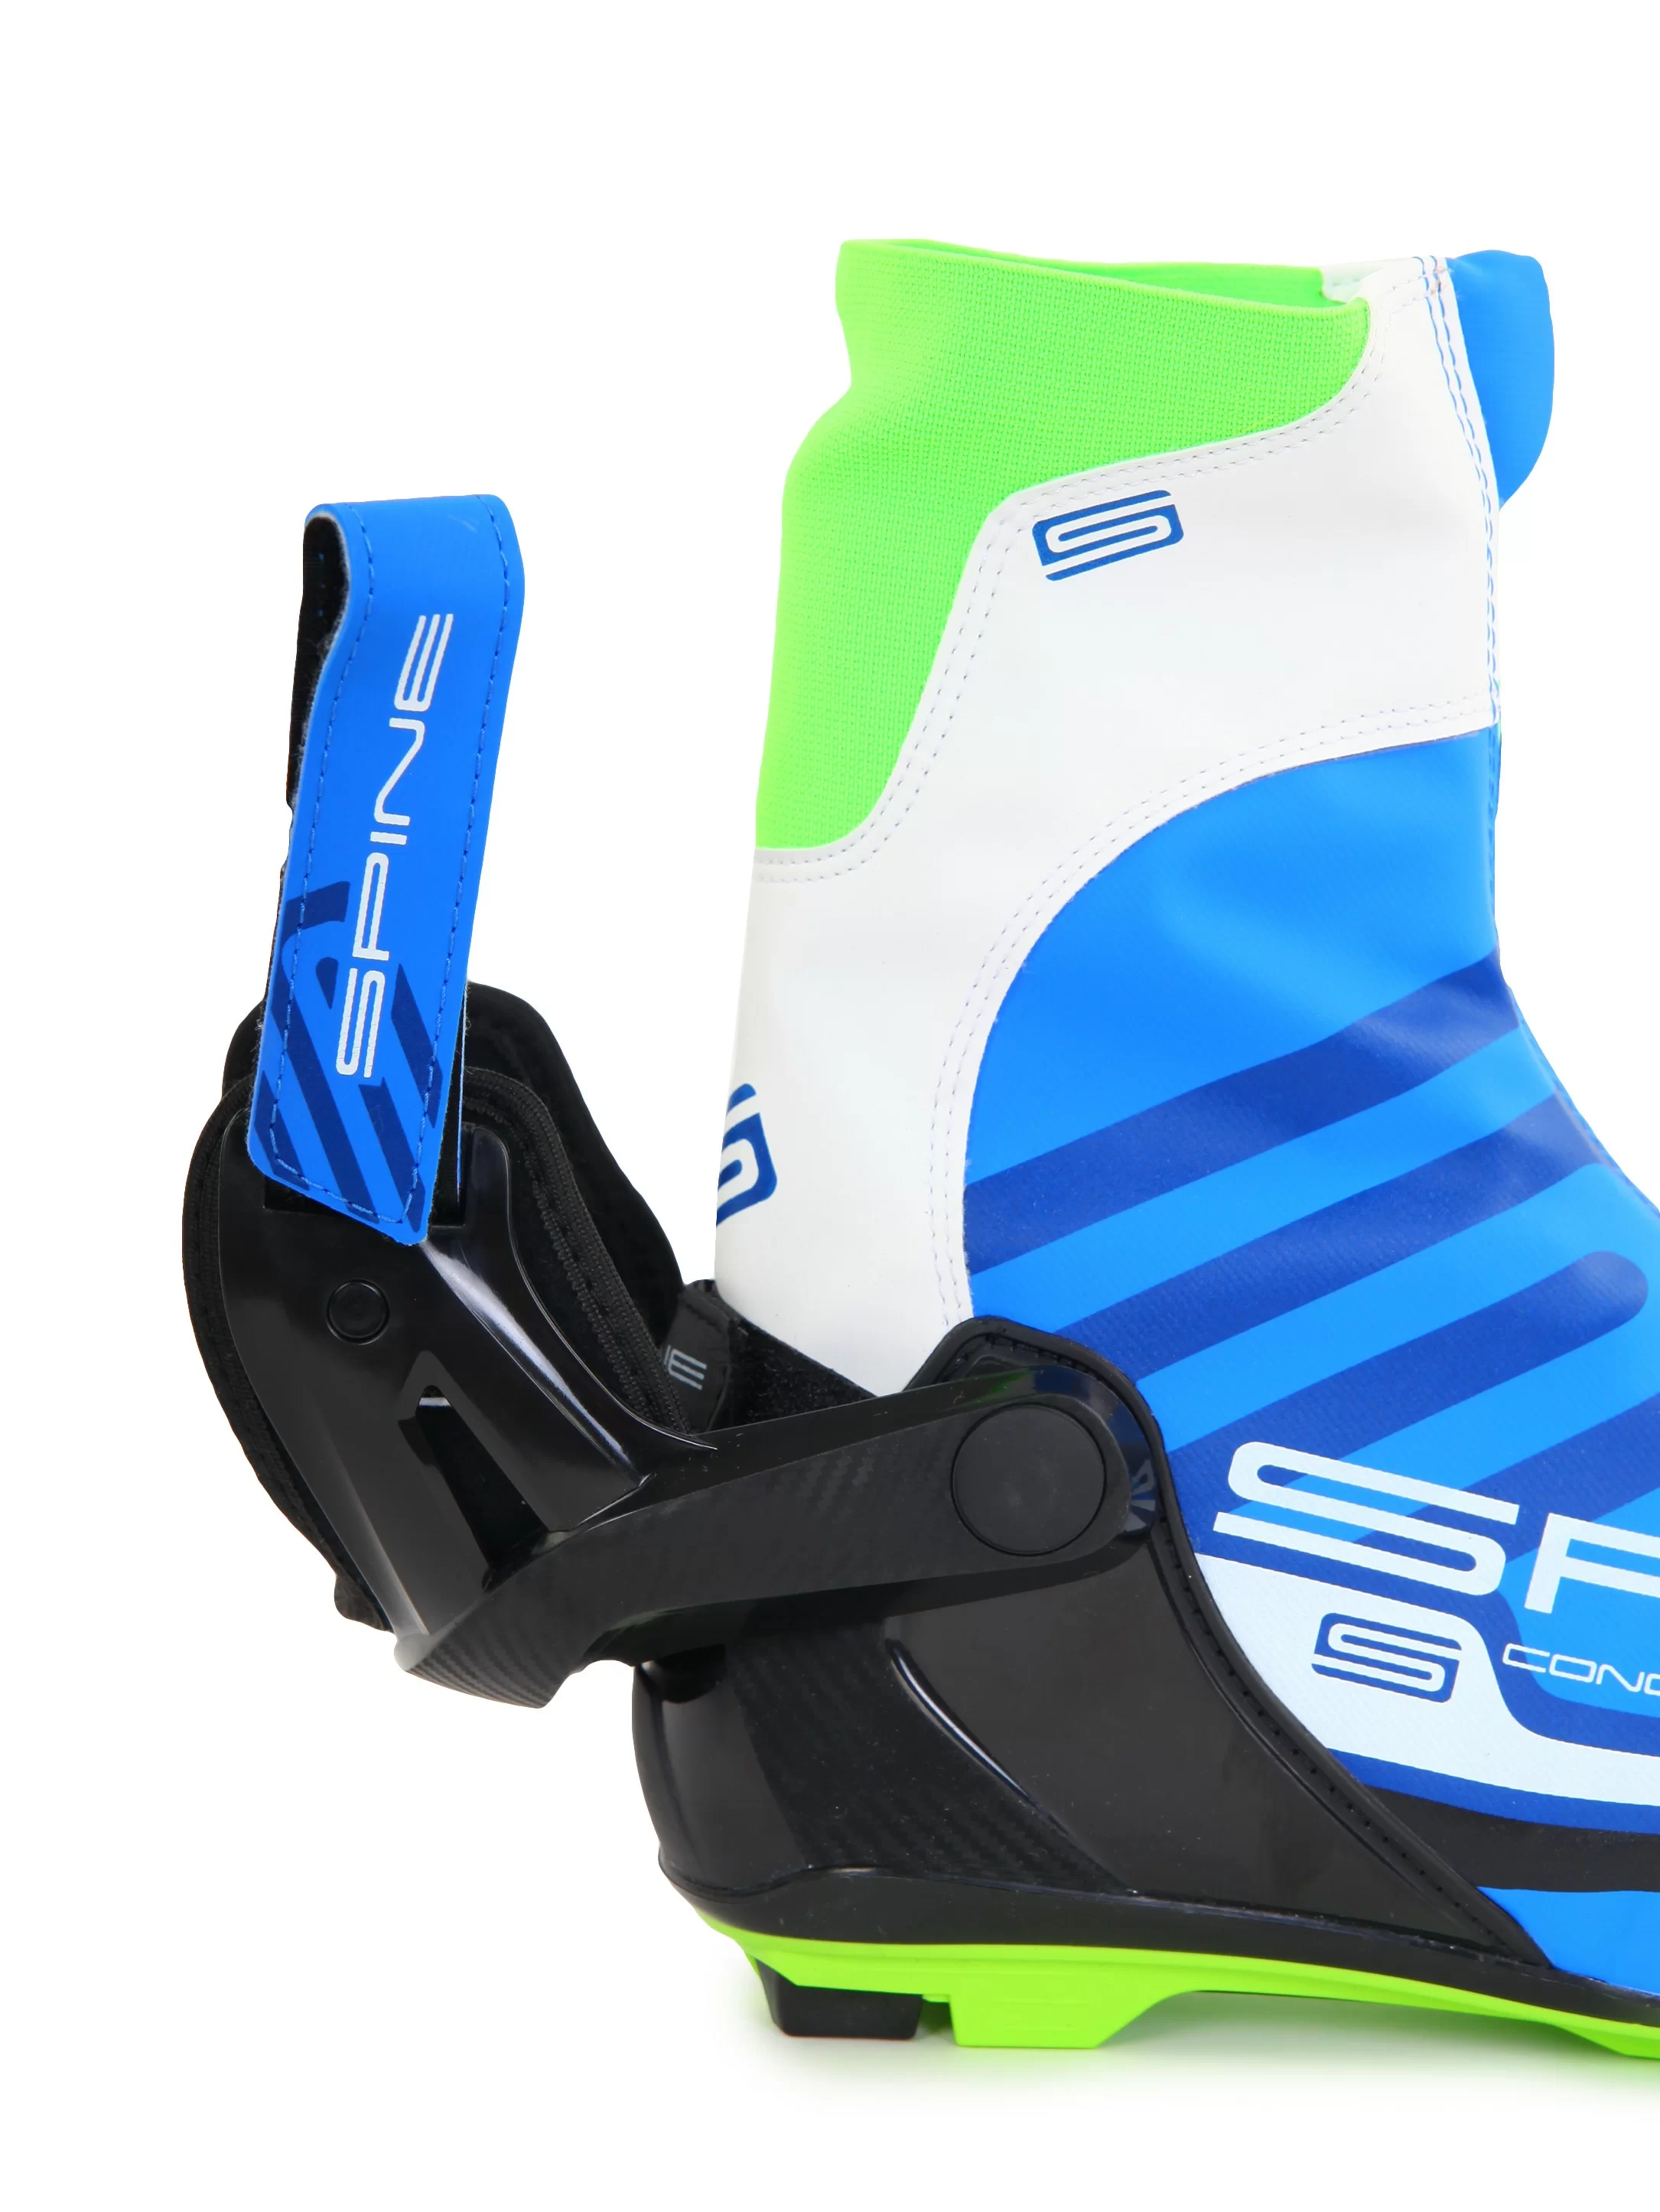 Фото Ботинки лыжные Spine Concept Skate Pro 297 NNN со склада магазина СпортСЕ